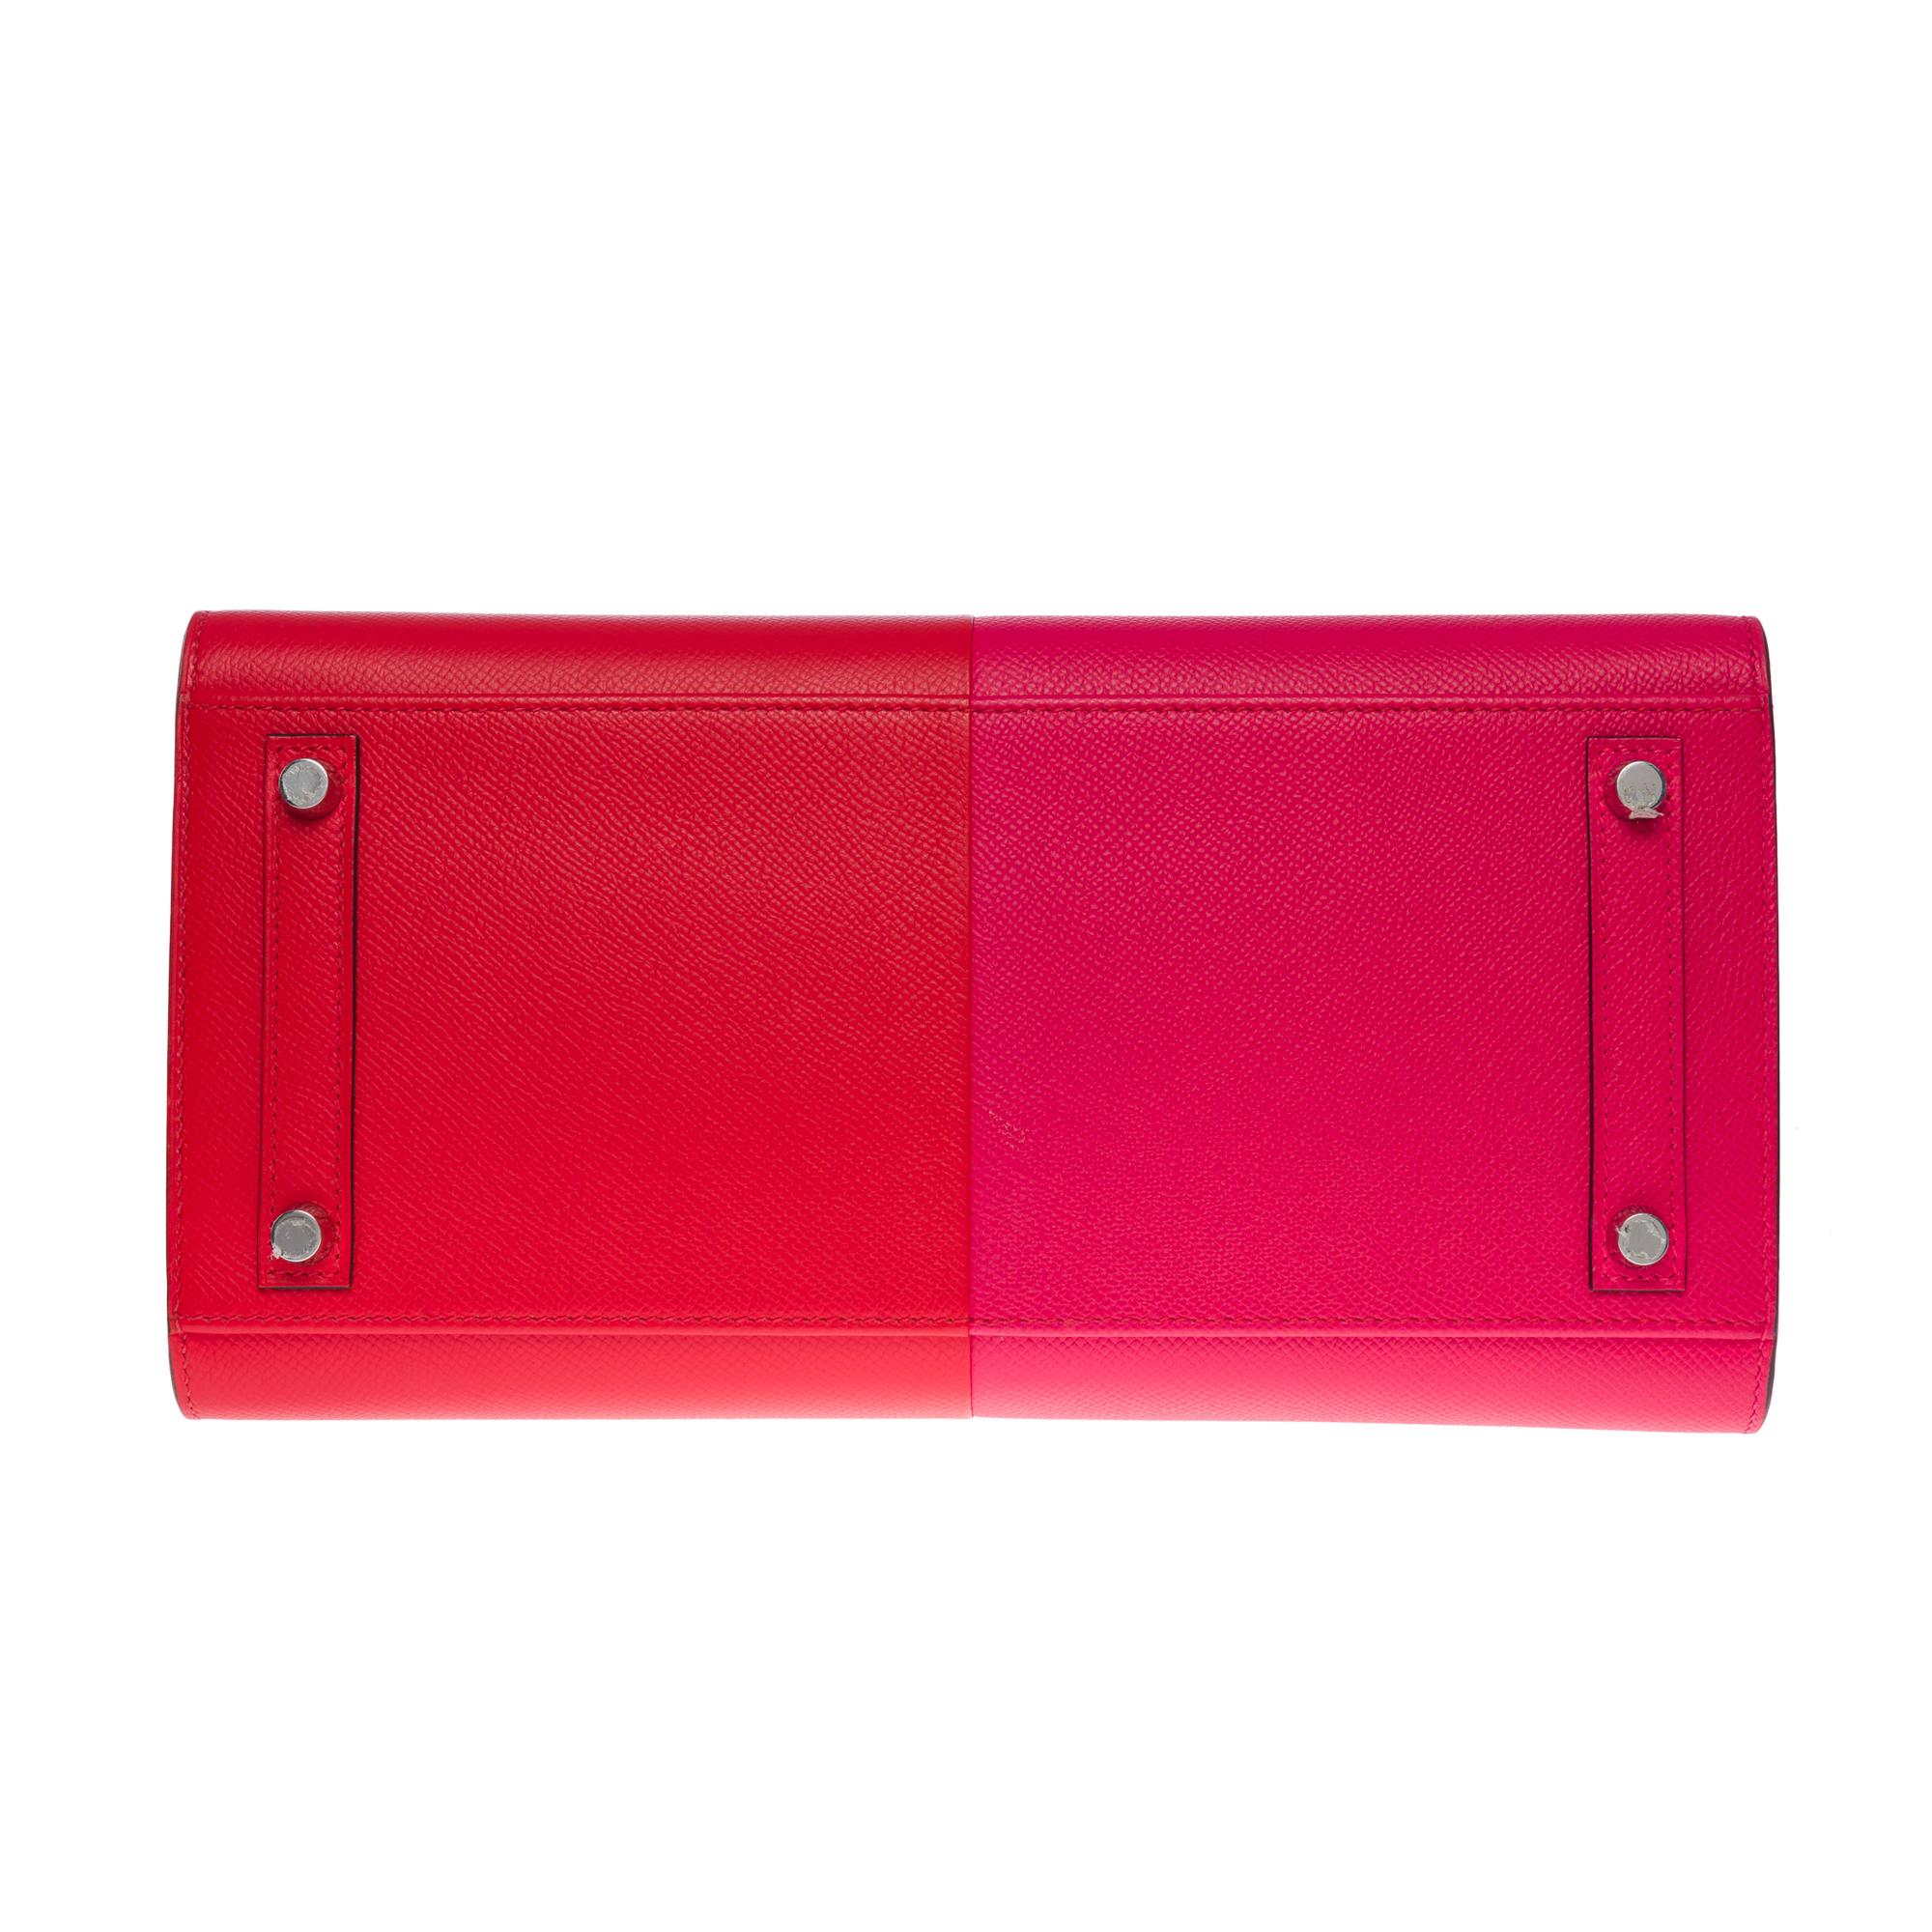 New Hermès Kazak limited edition Birkin 30 handbag in Red/Pink Epsom leather, SHW 6